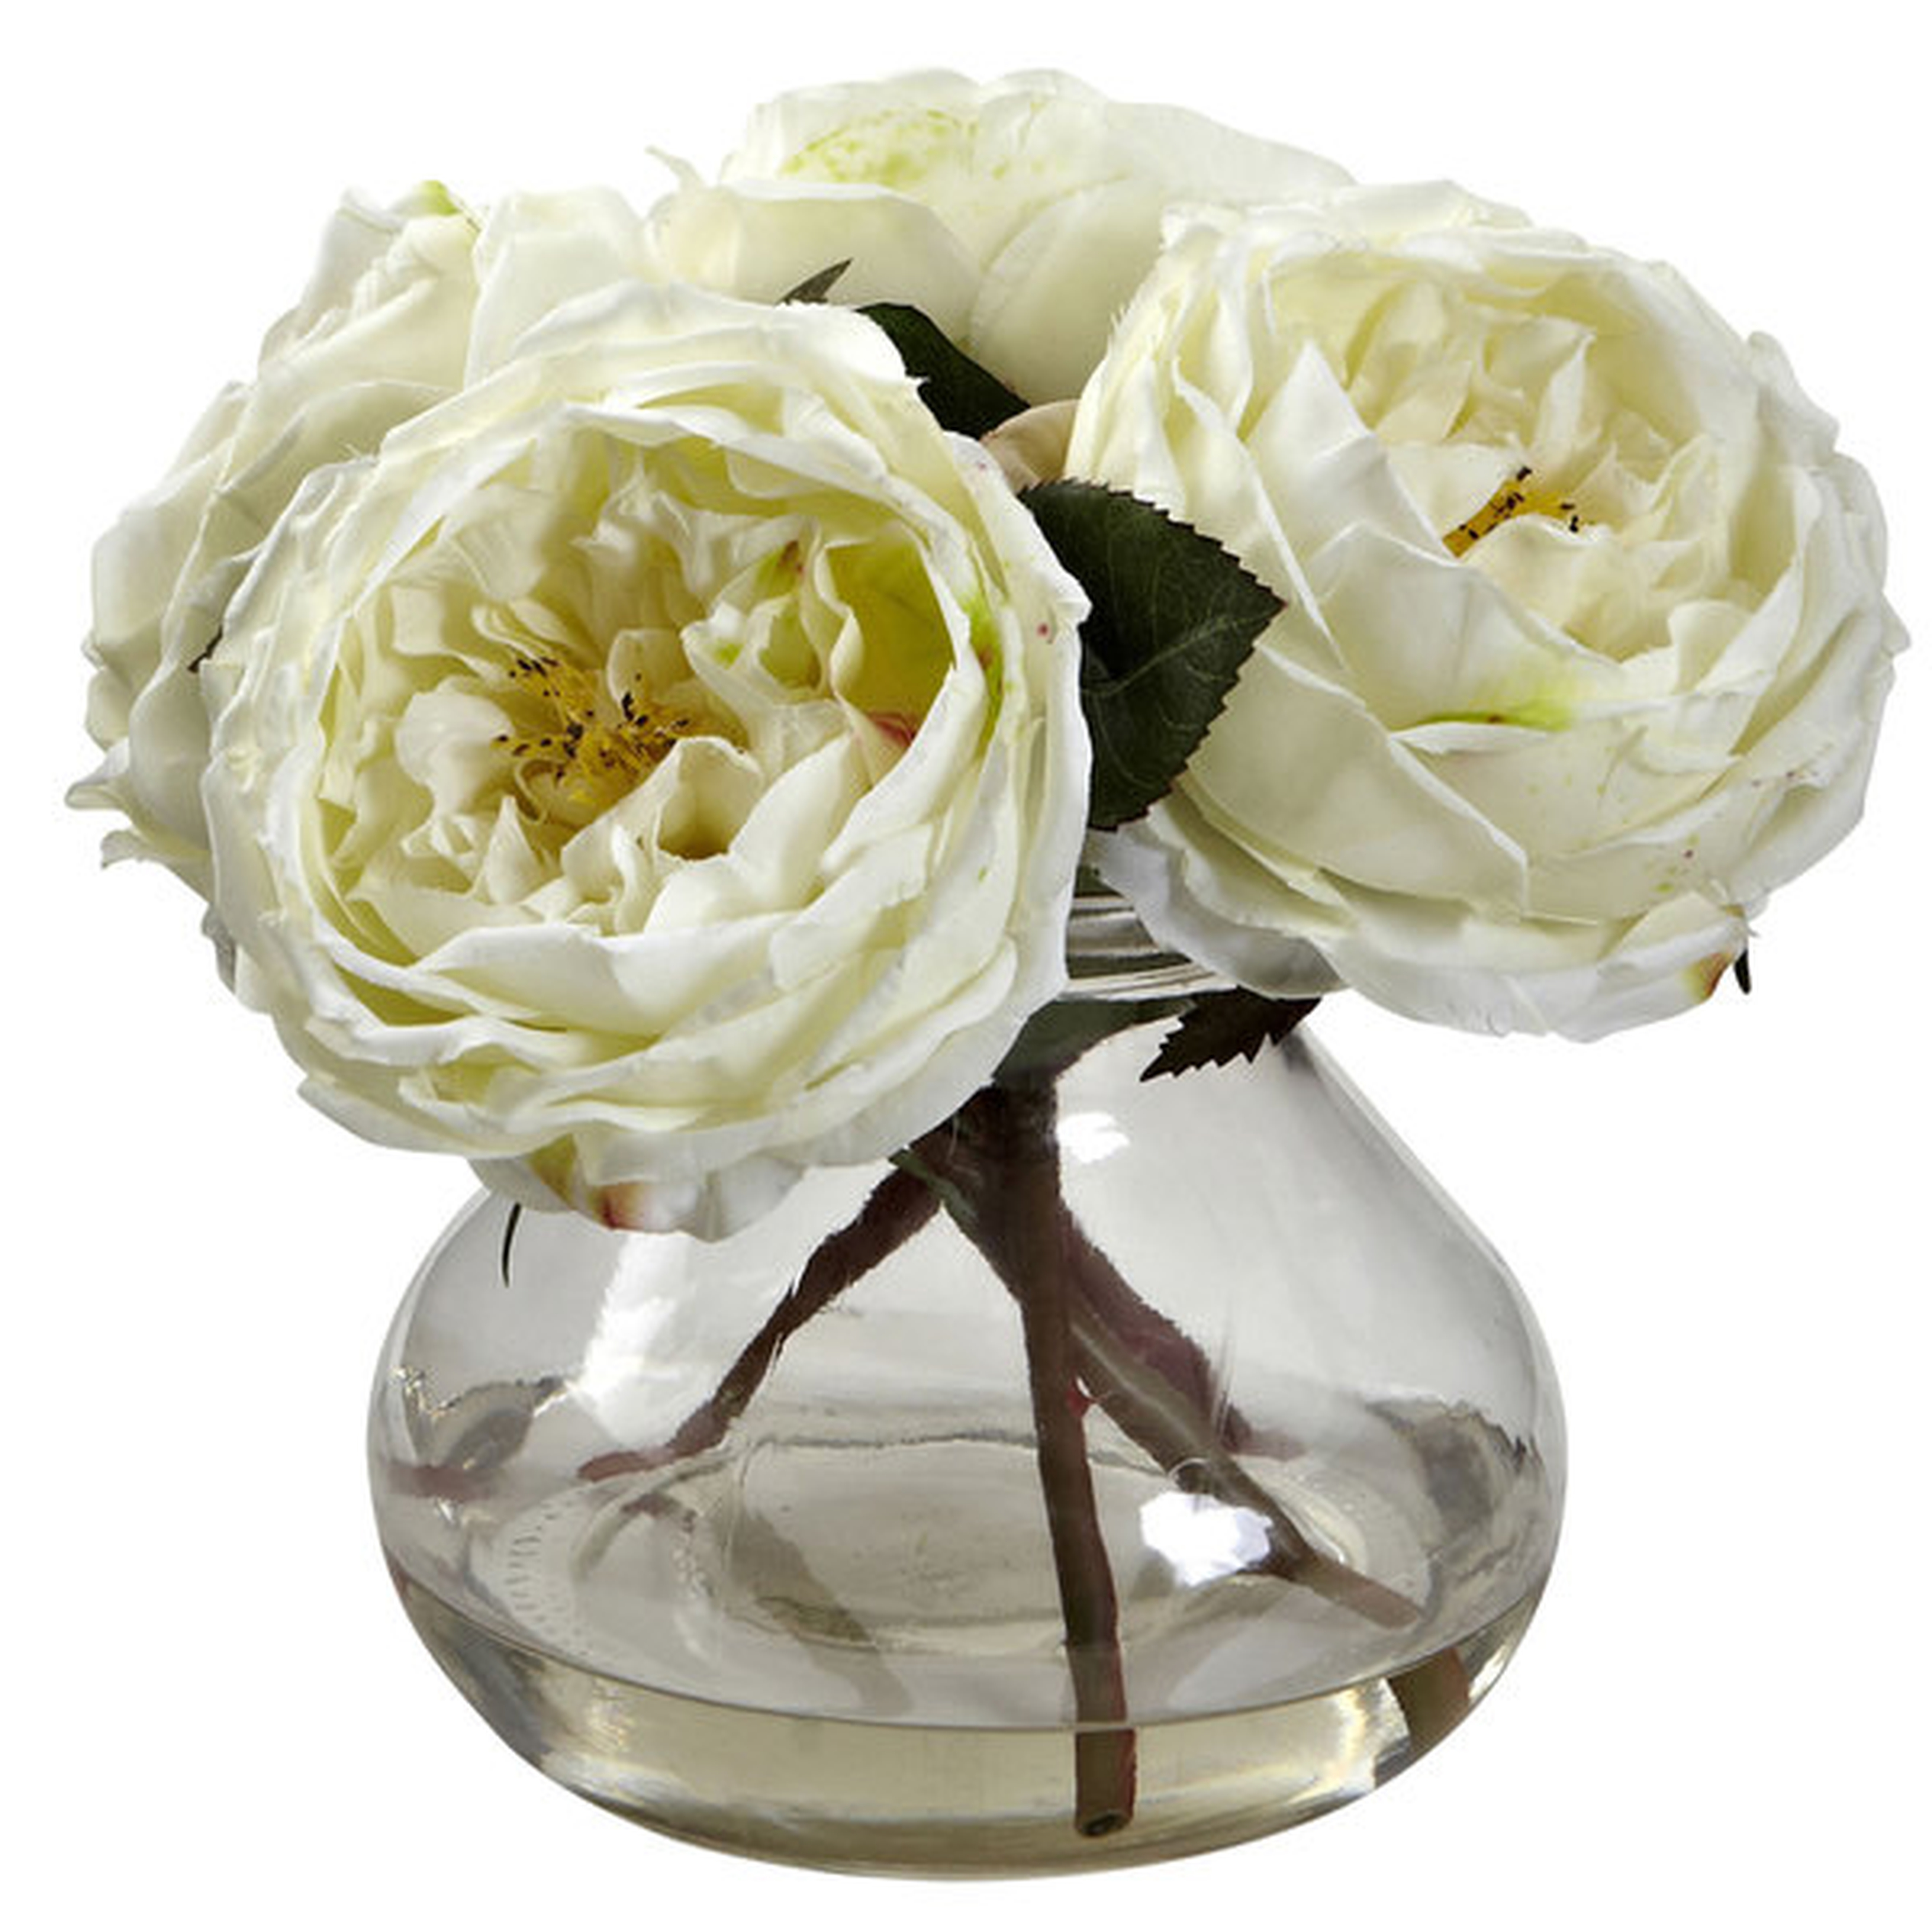 Fancy Rose Floral Arrangement - White - Overstock